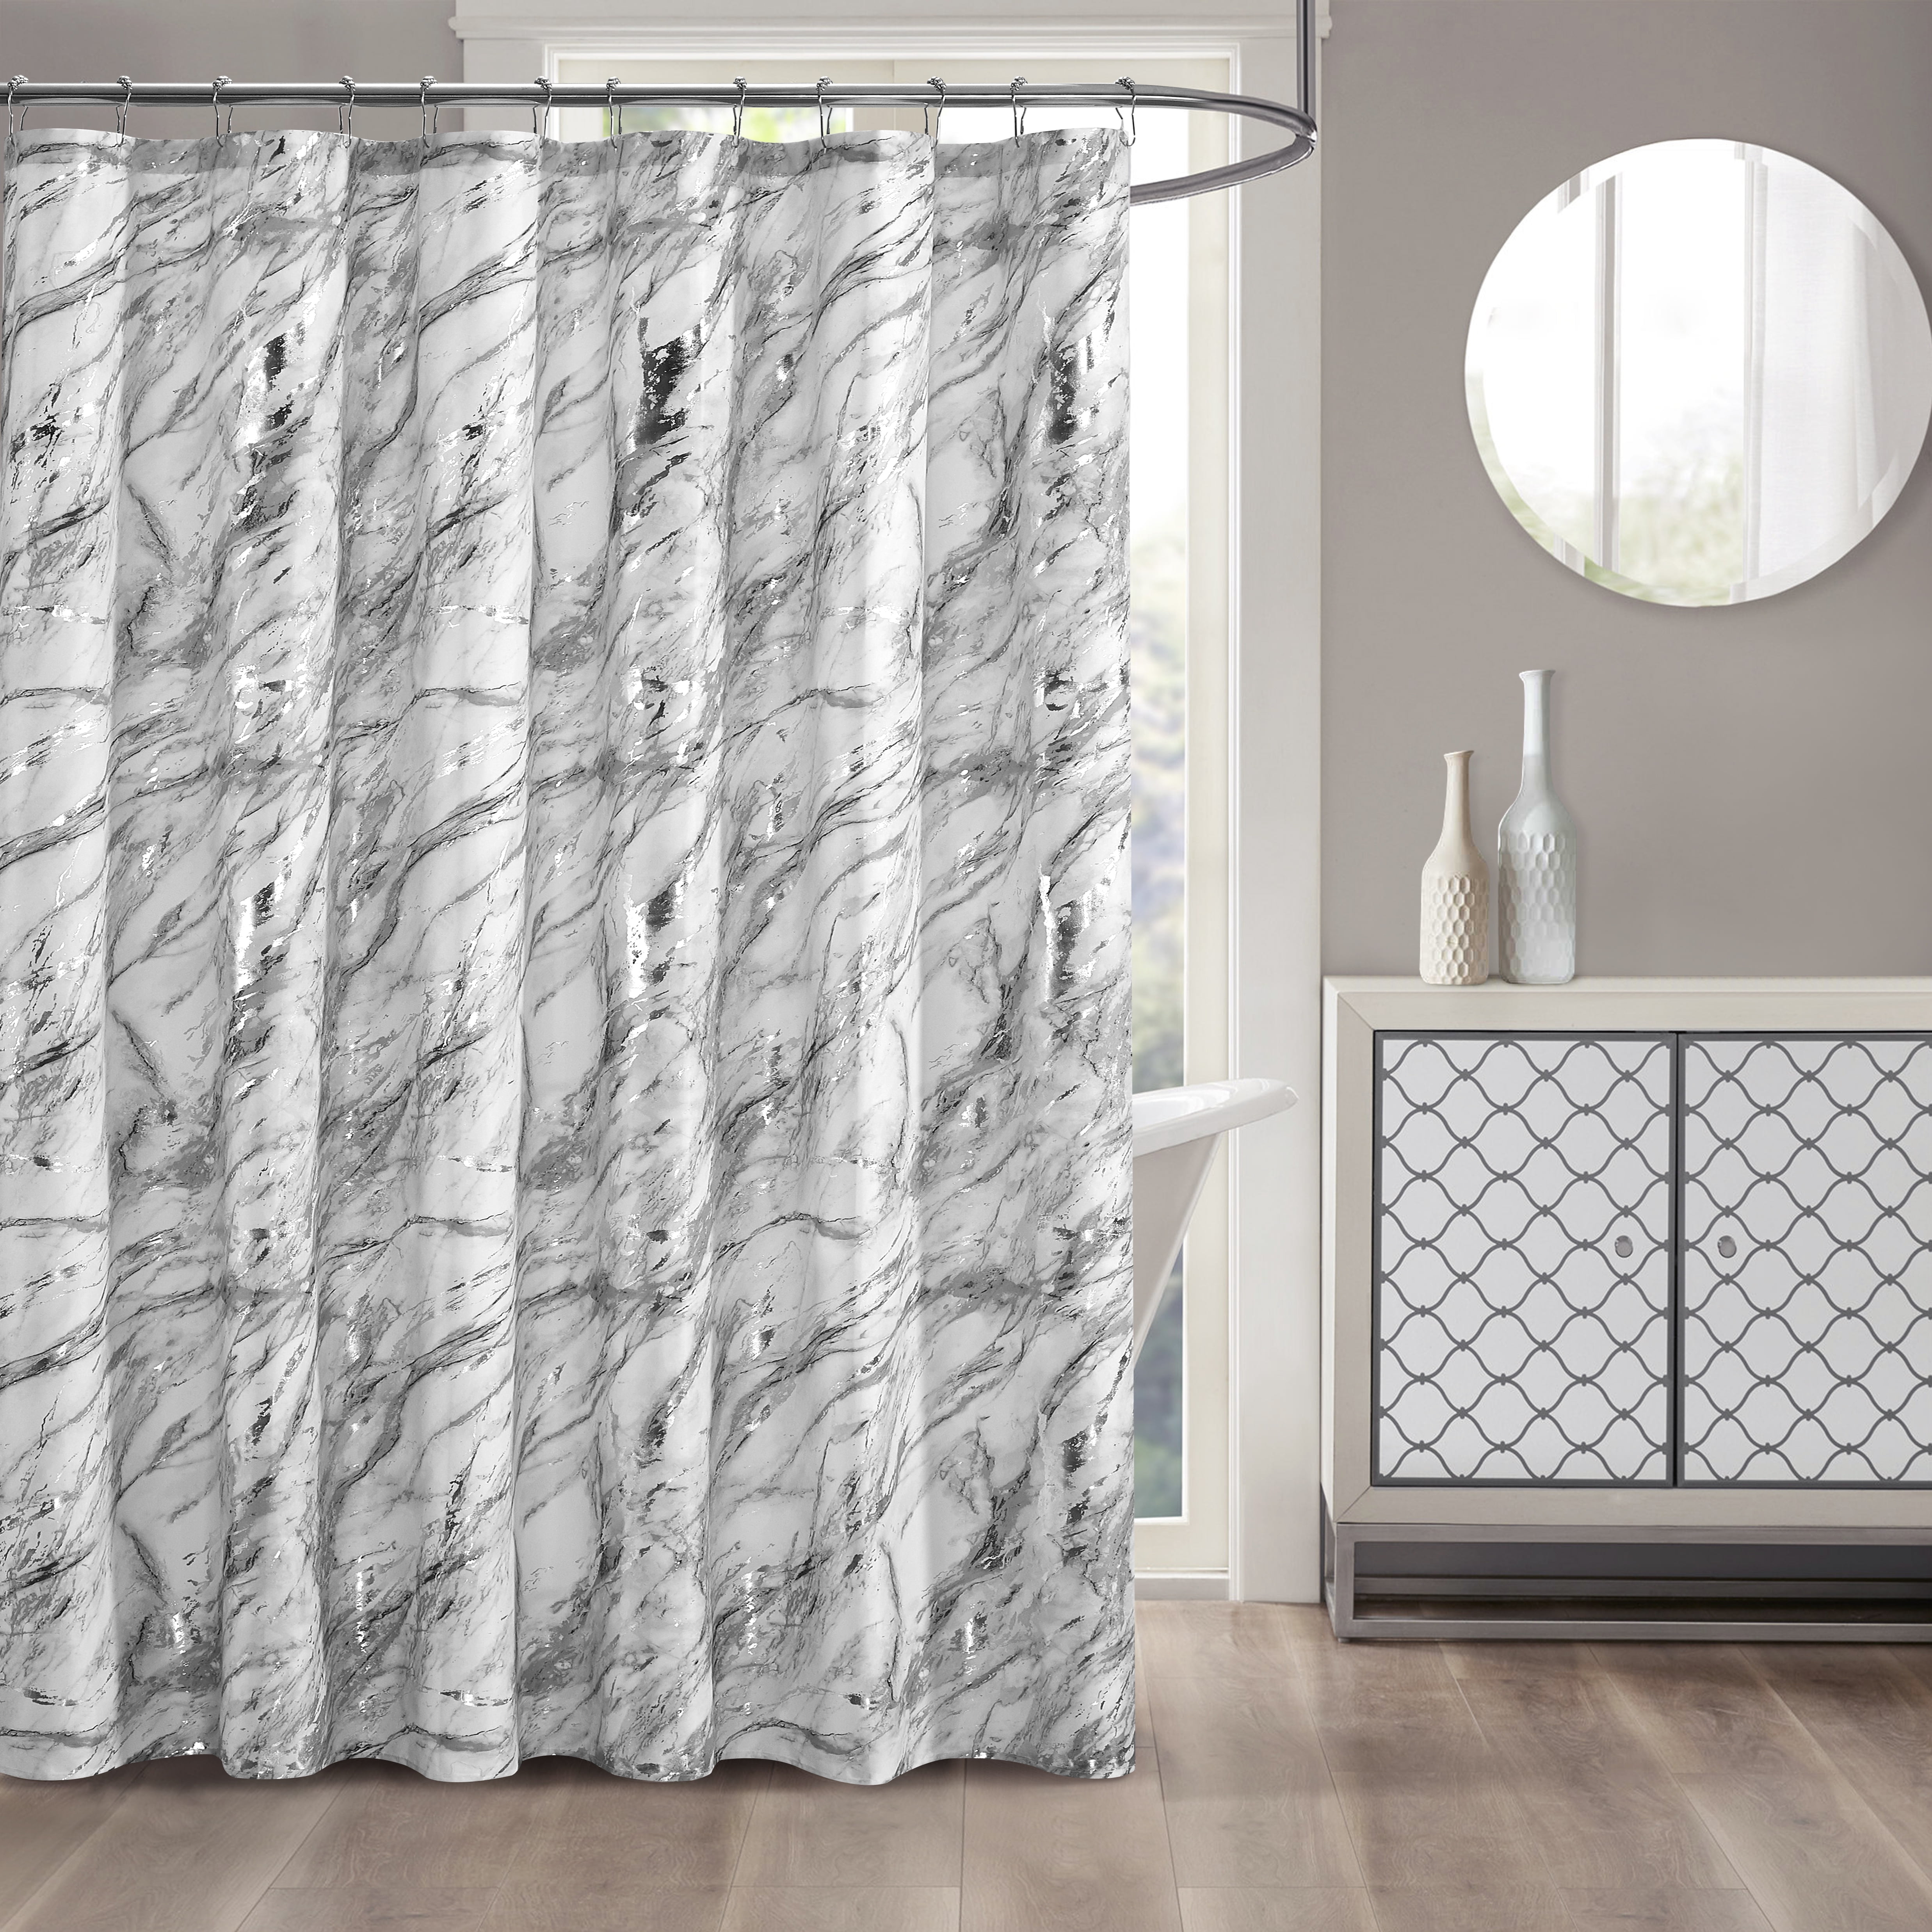 Mainstays Metallic Marble Printed 72 x 72 Fabric Shower Curtain